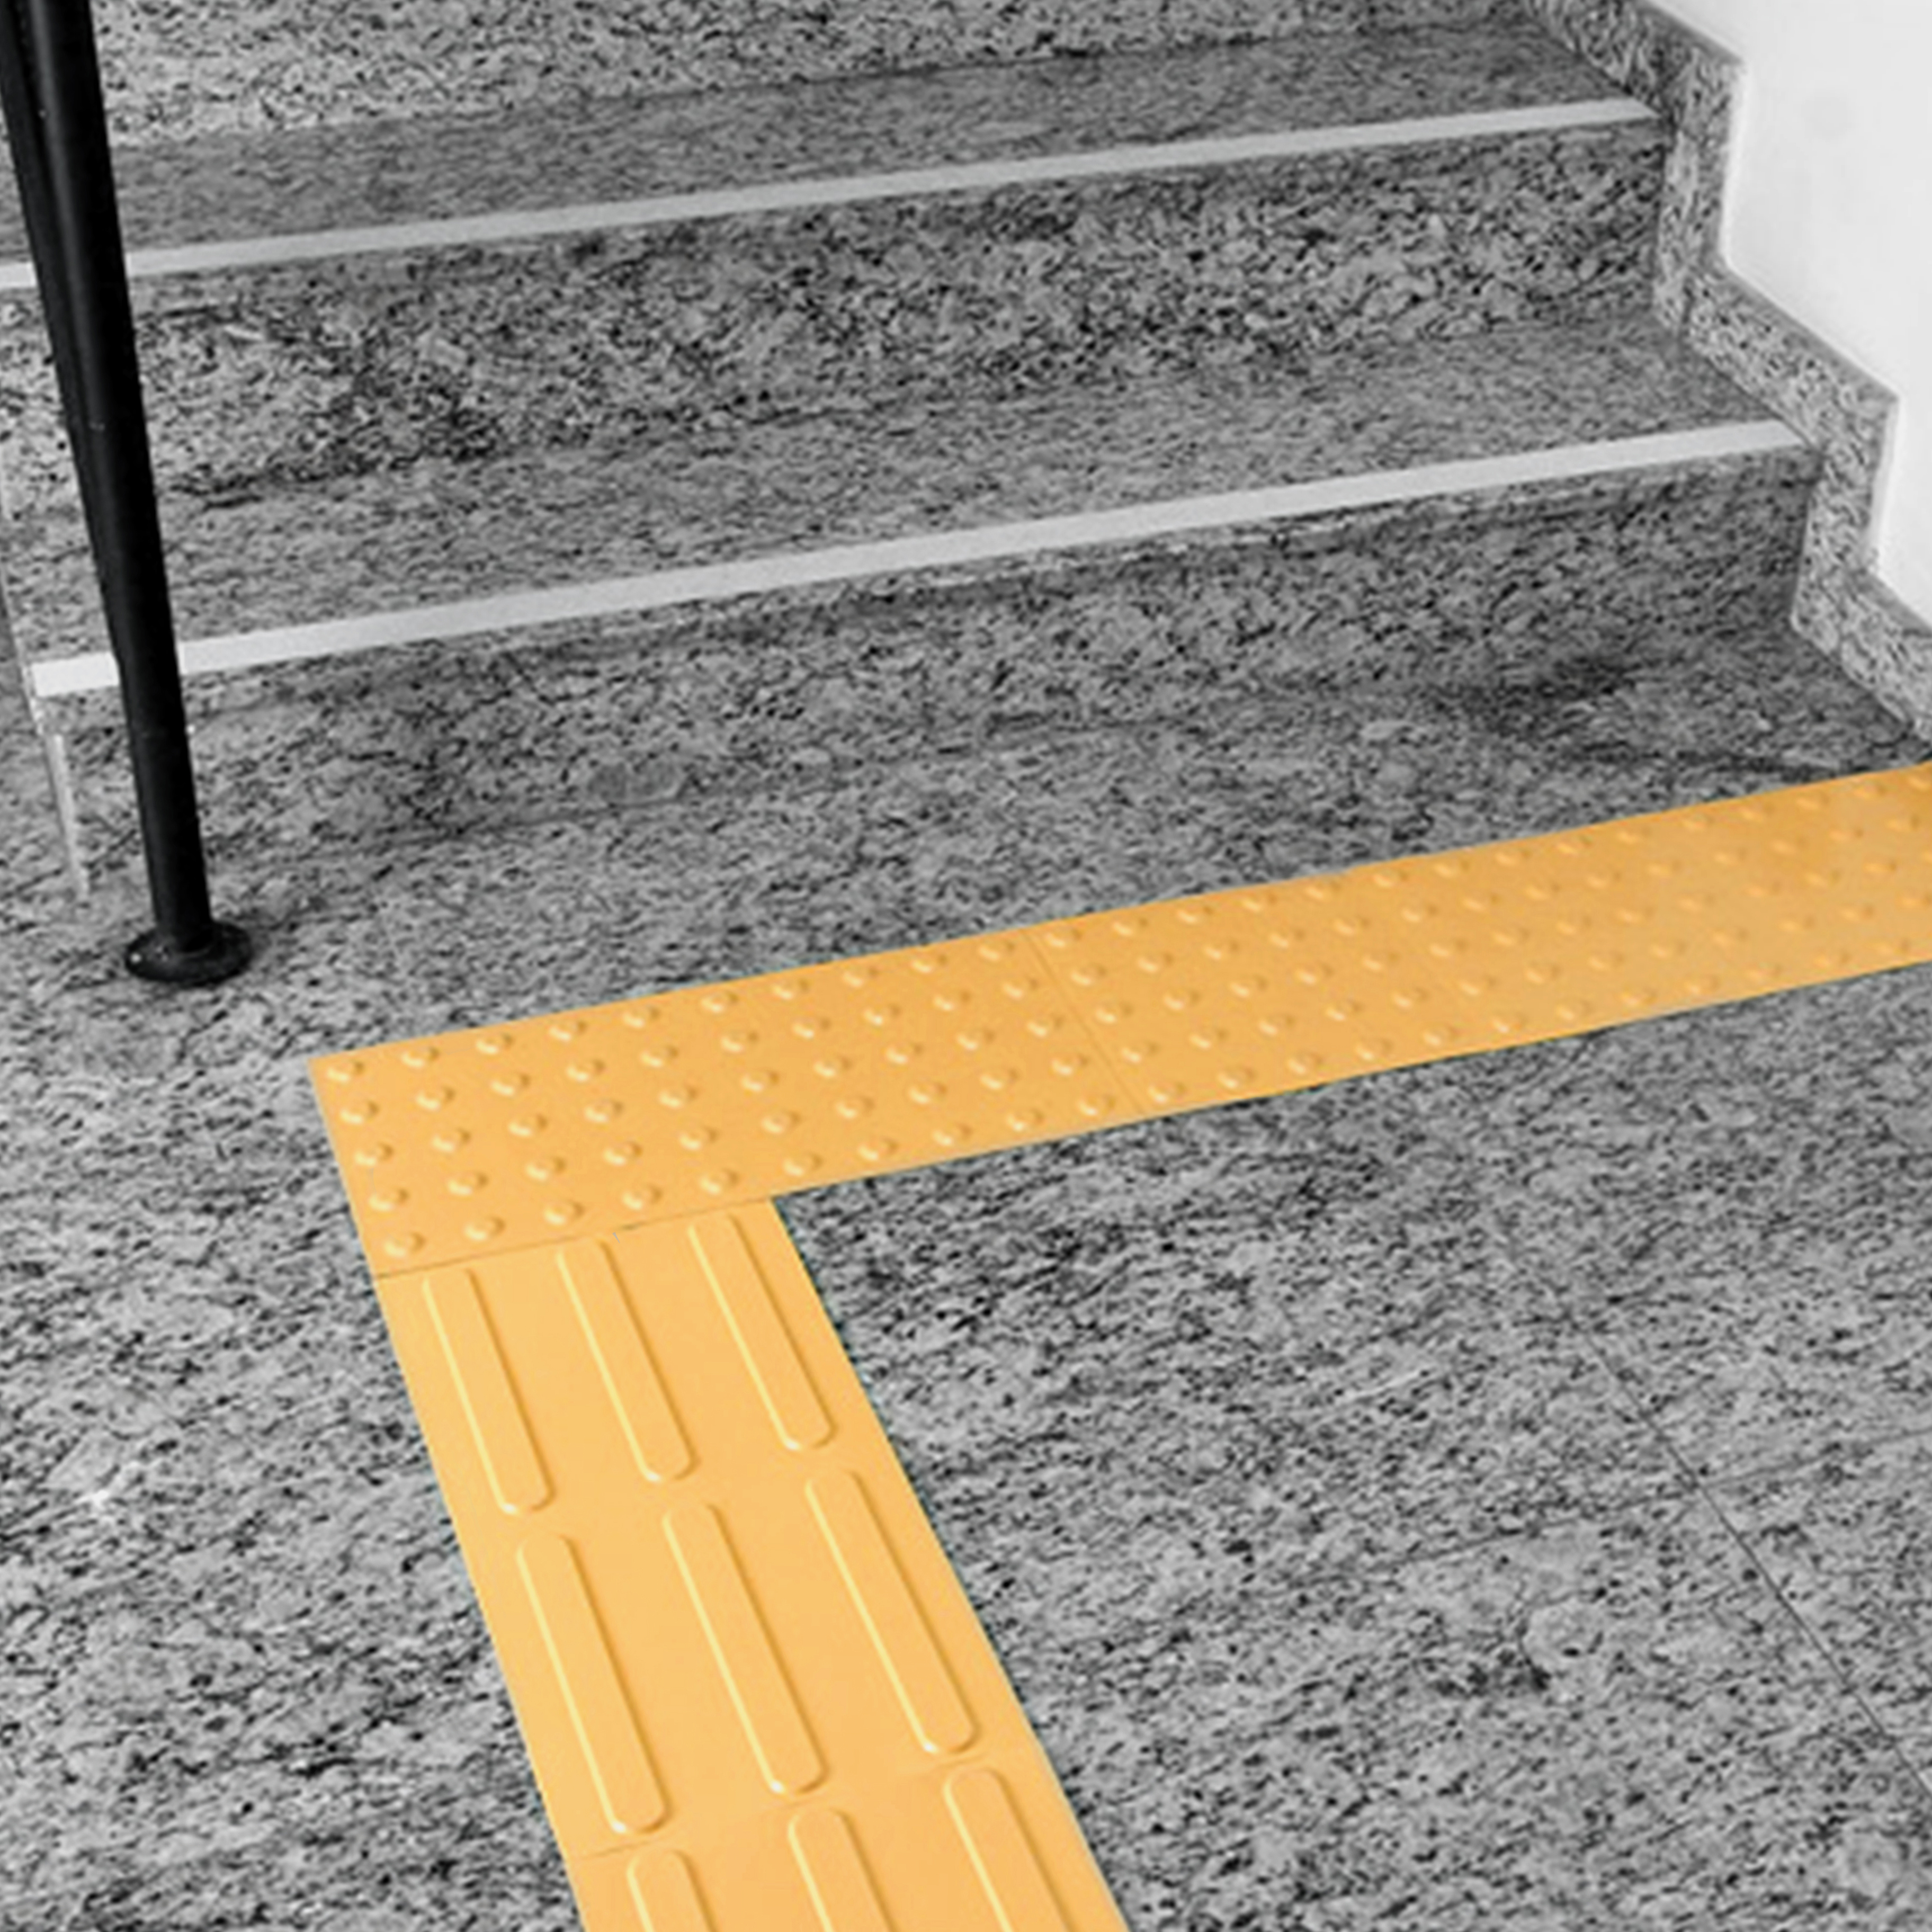 Baldosa podotáctil pavimento táctil ciegos invidentes de 25x25cm círculos de parada amarillo 10-pack